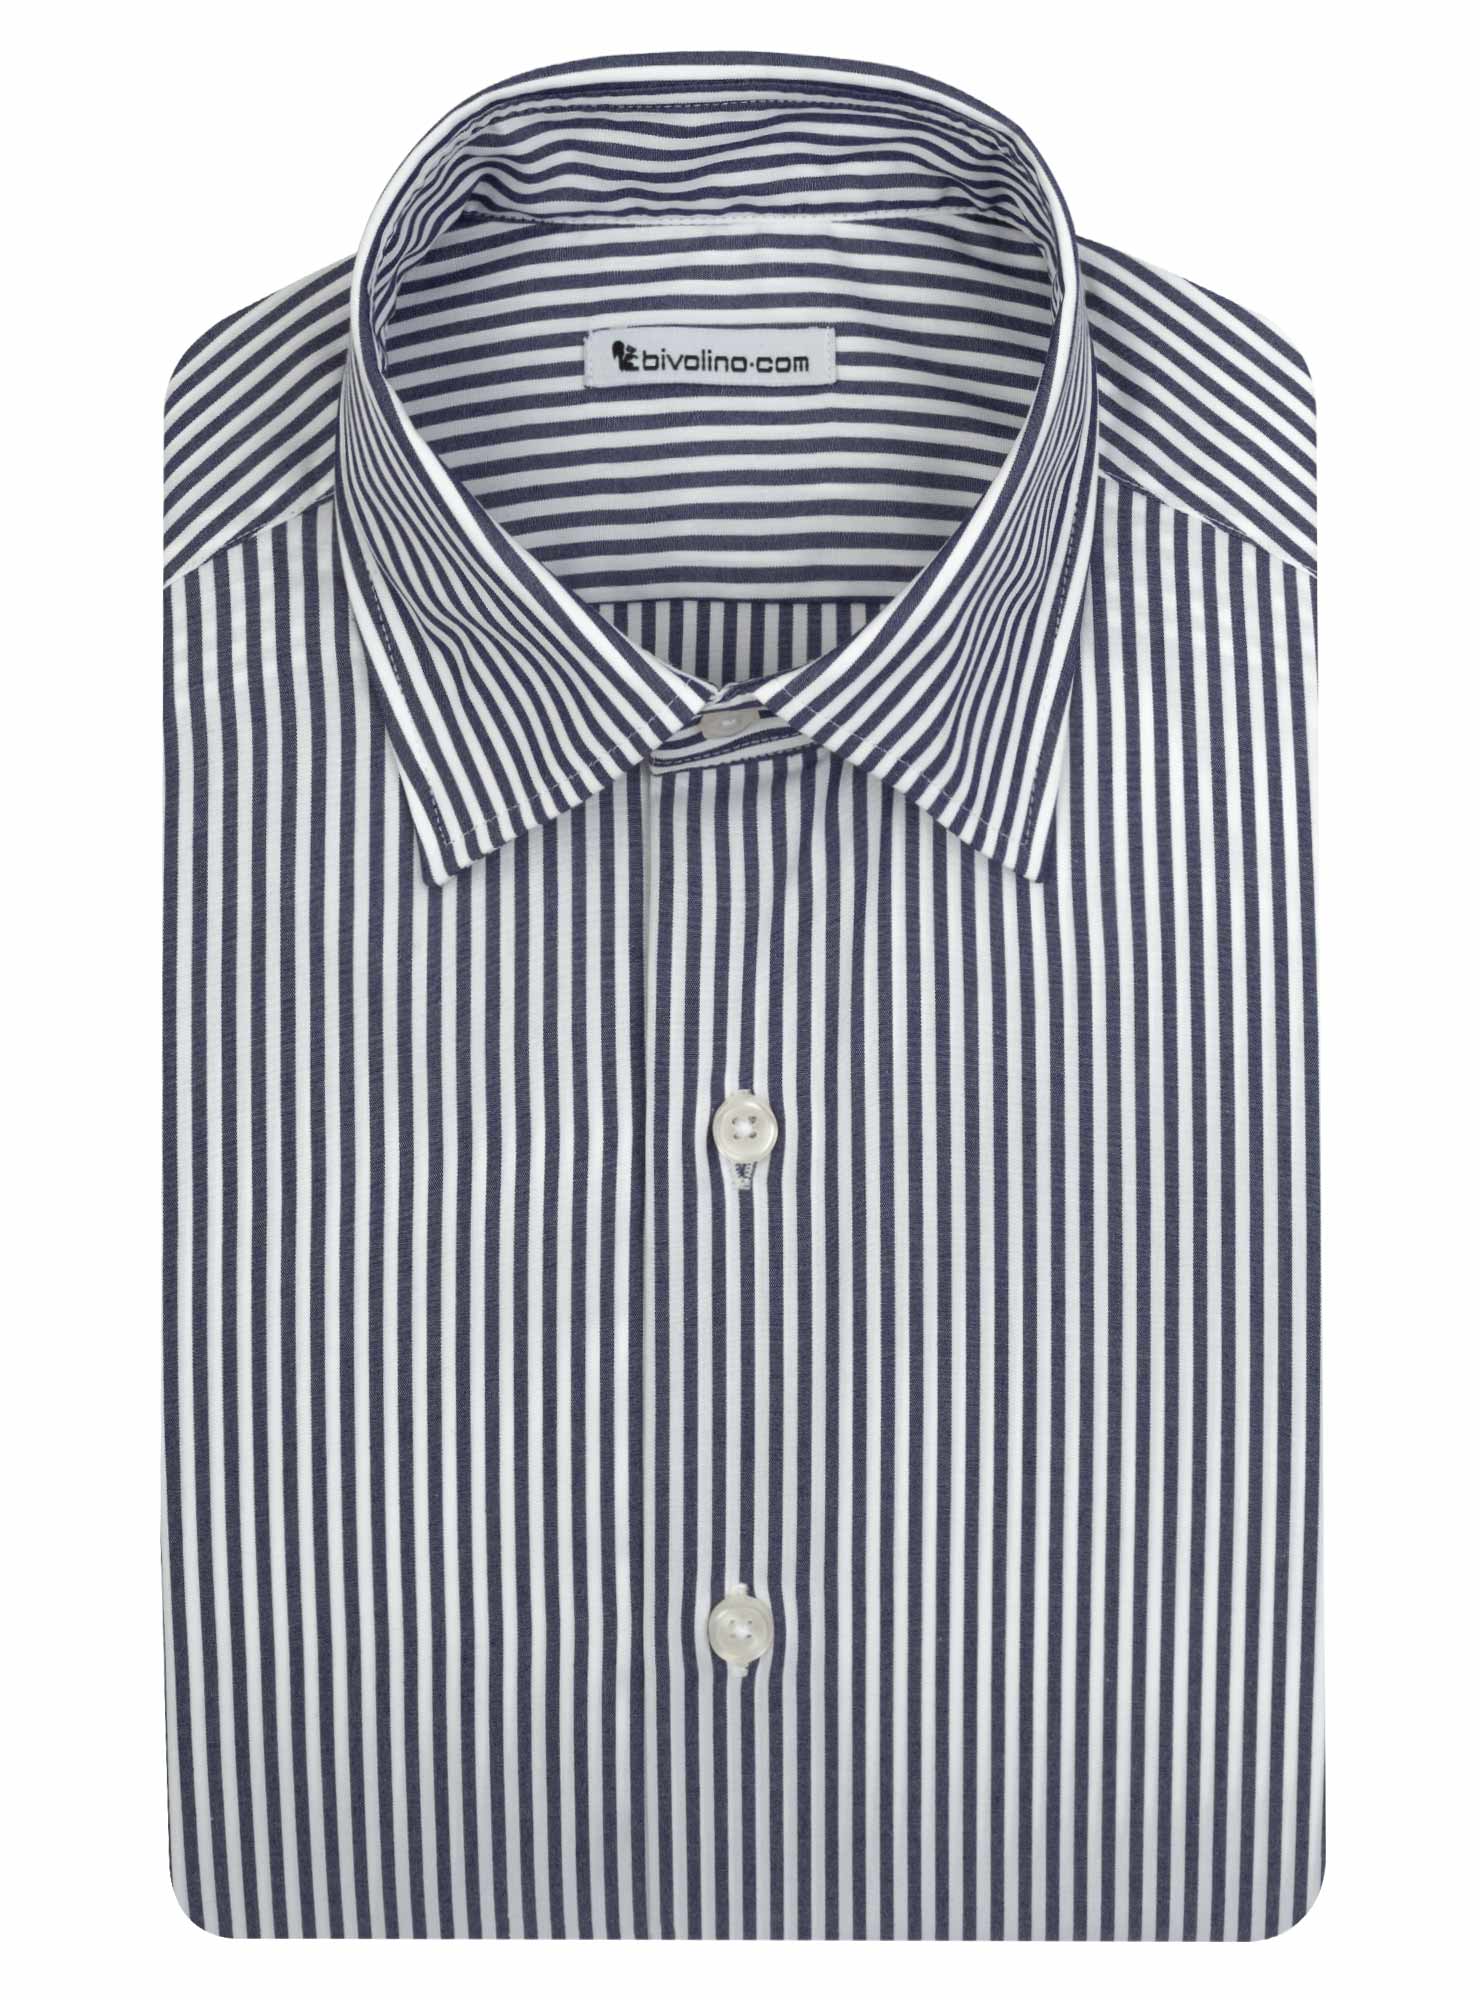 TORTOLì -  striped poplin navy easy-care tailored men shirt - RIVO 2